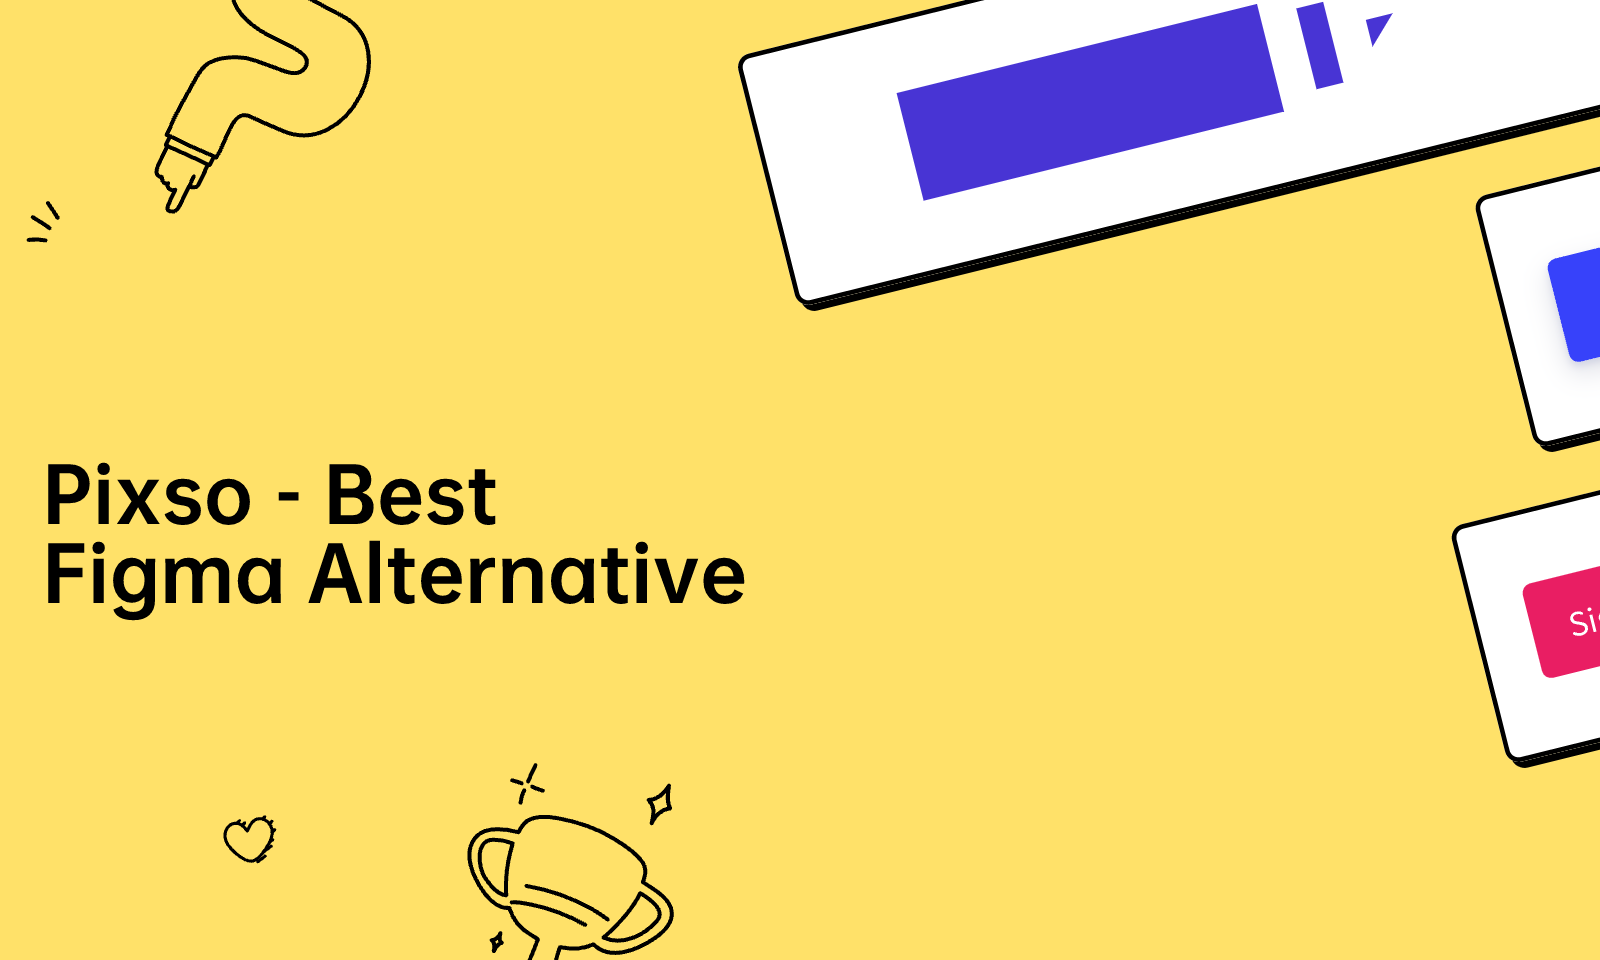  The Best Figma Alternative - Pixso